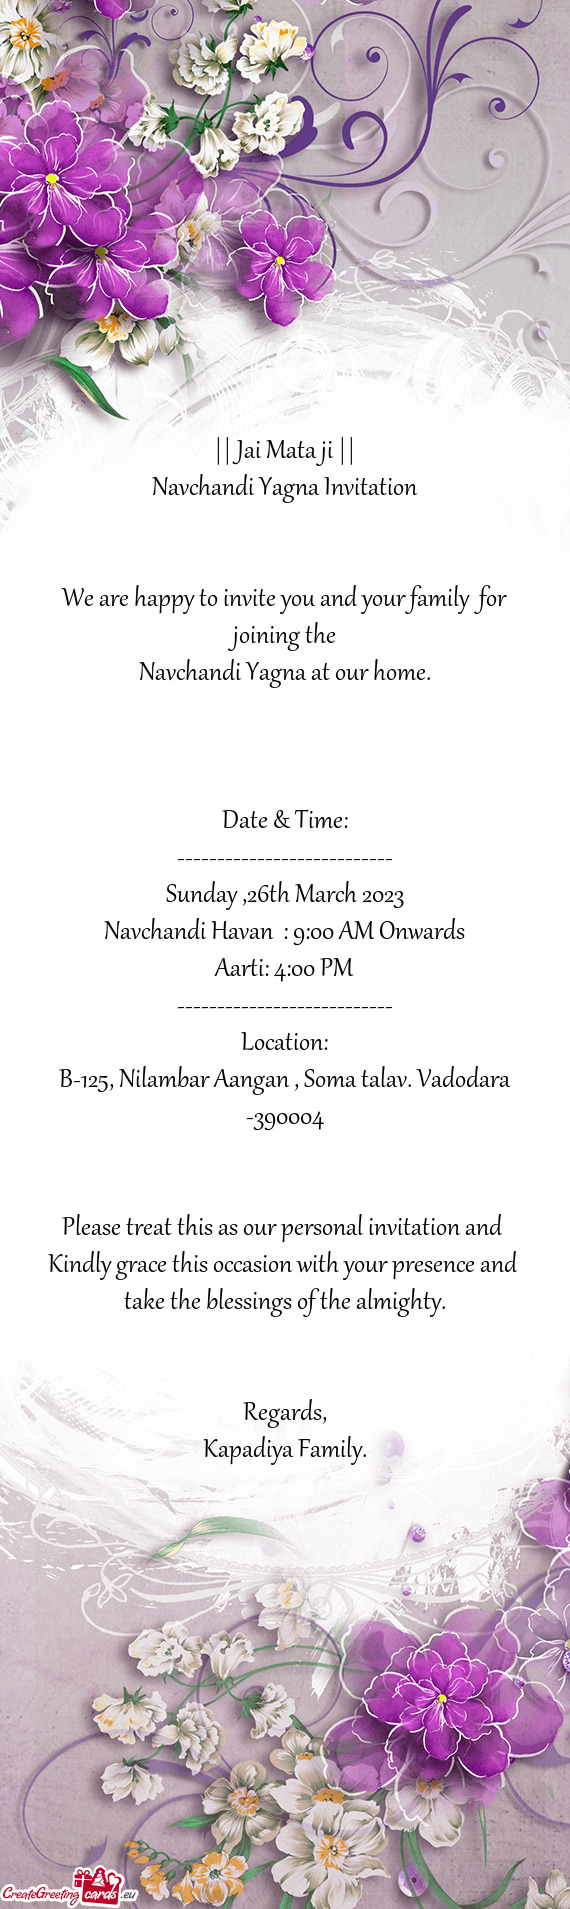 Navchandi Yagna Invitation